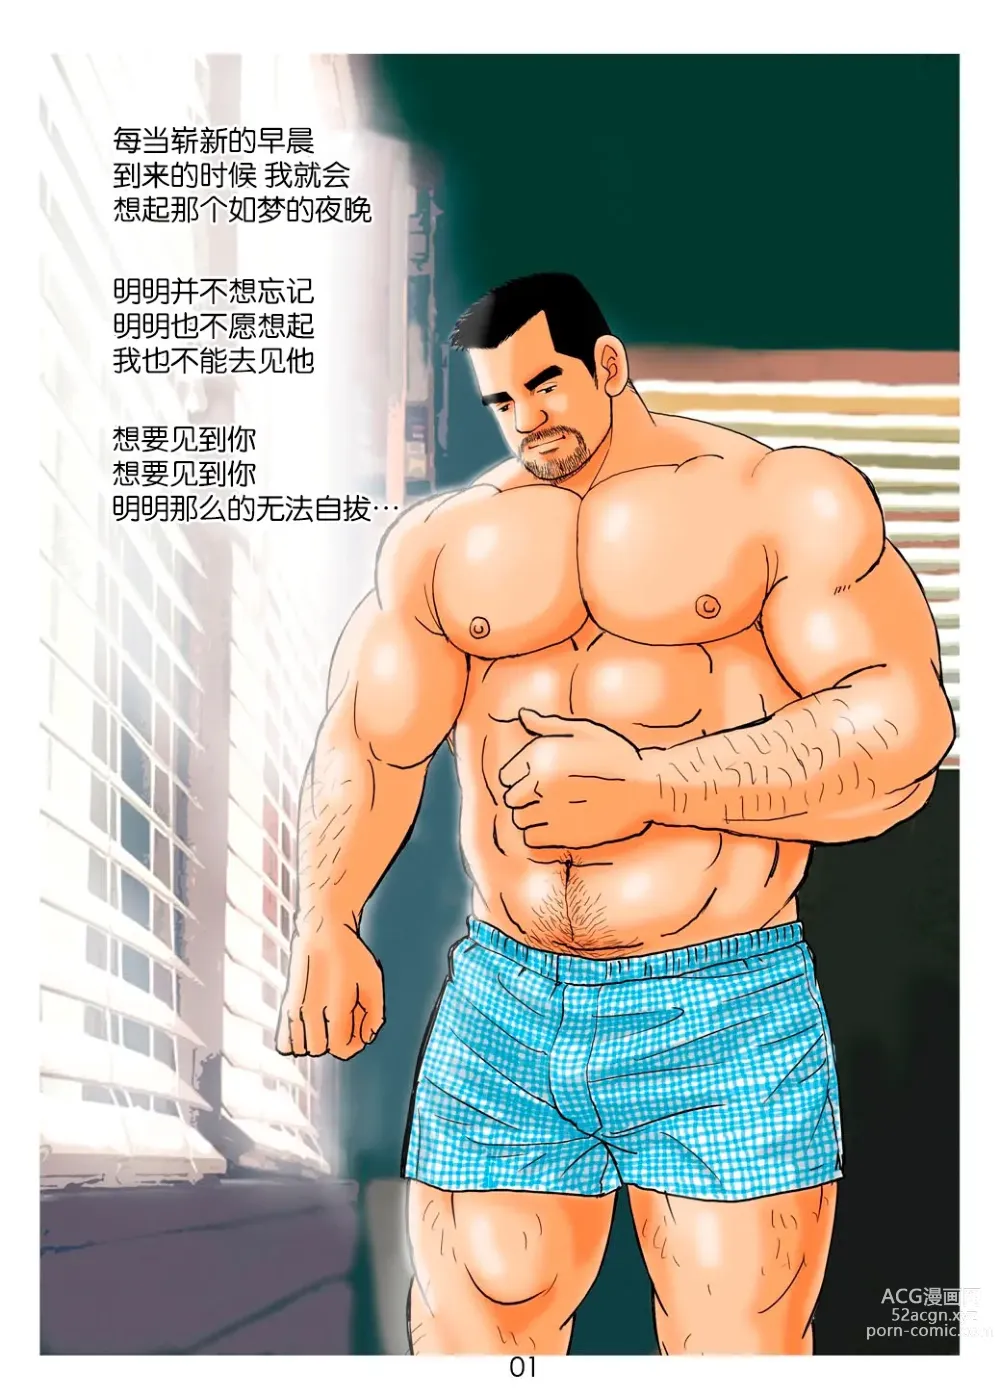 Page 1 of manga 「铁道员的浪漫」第一回 深夜的站长室